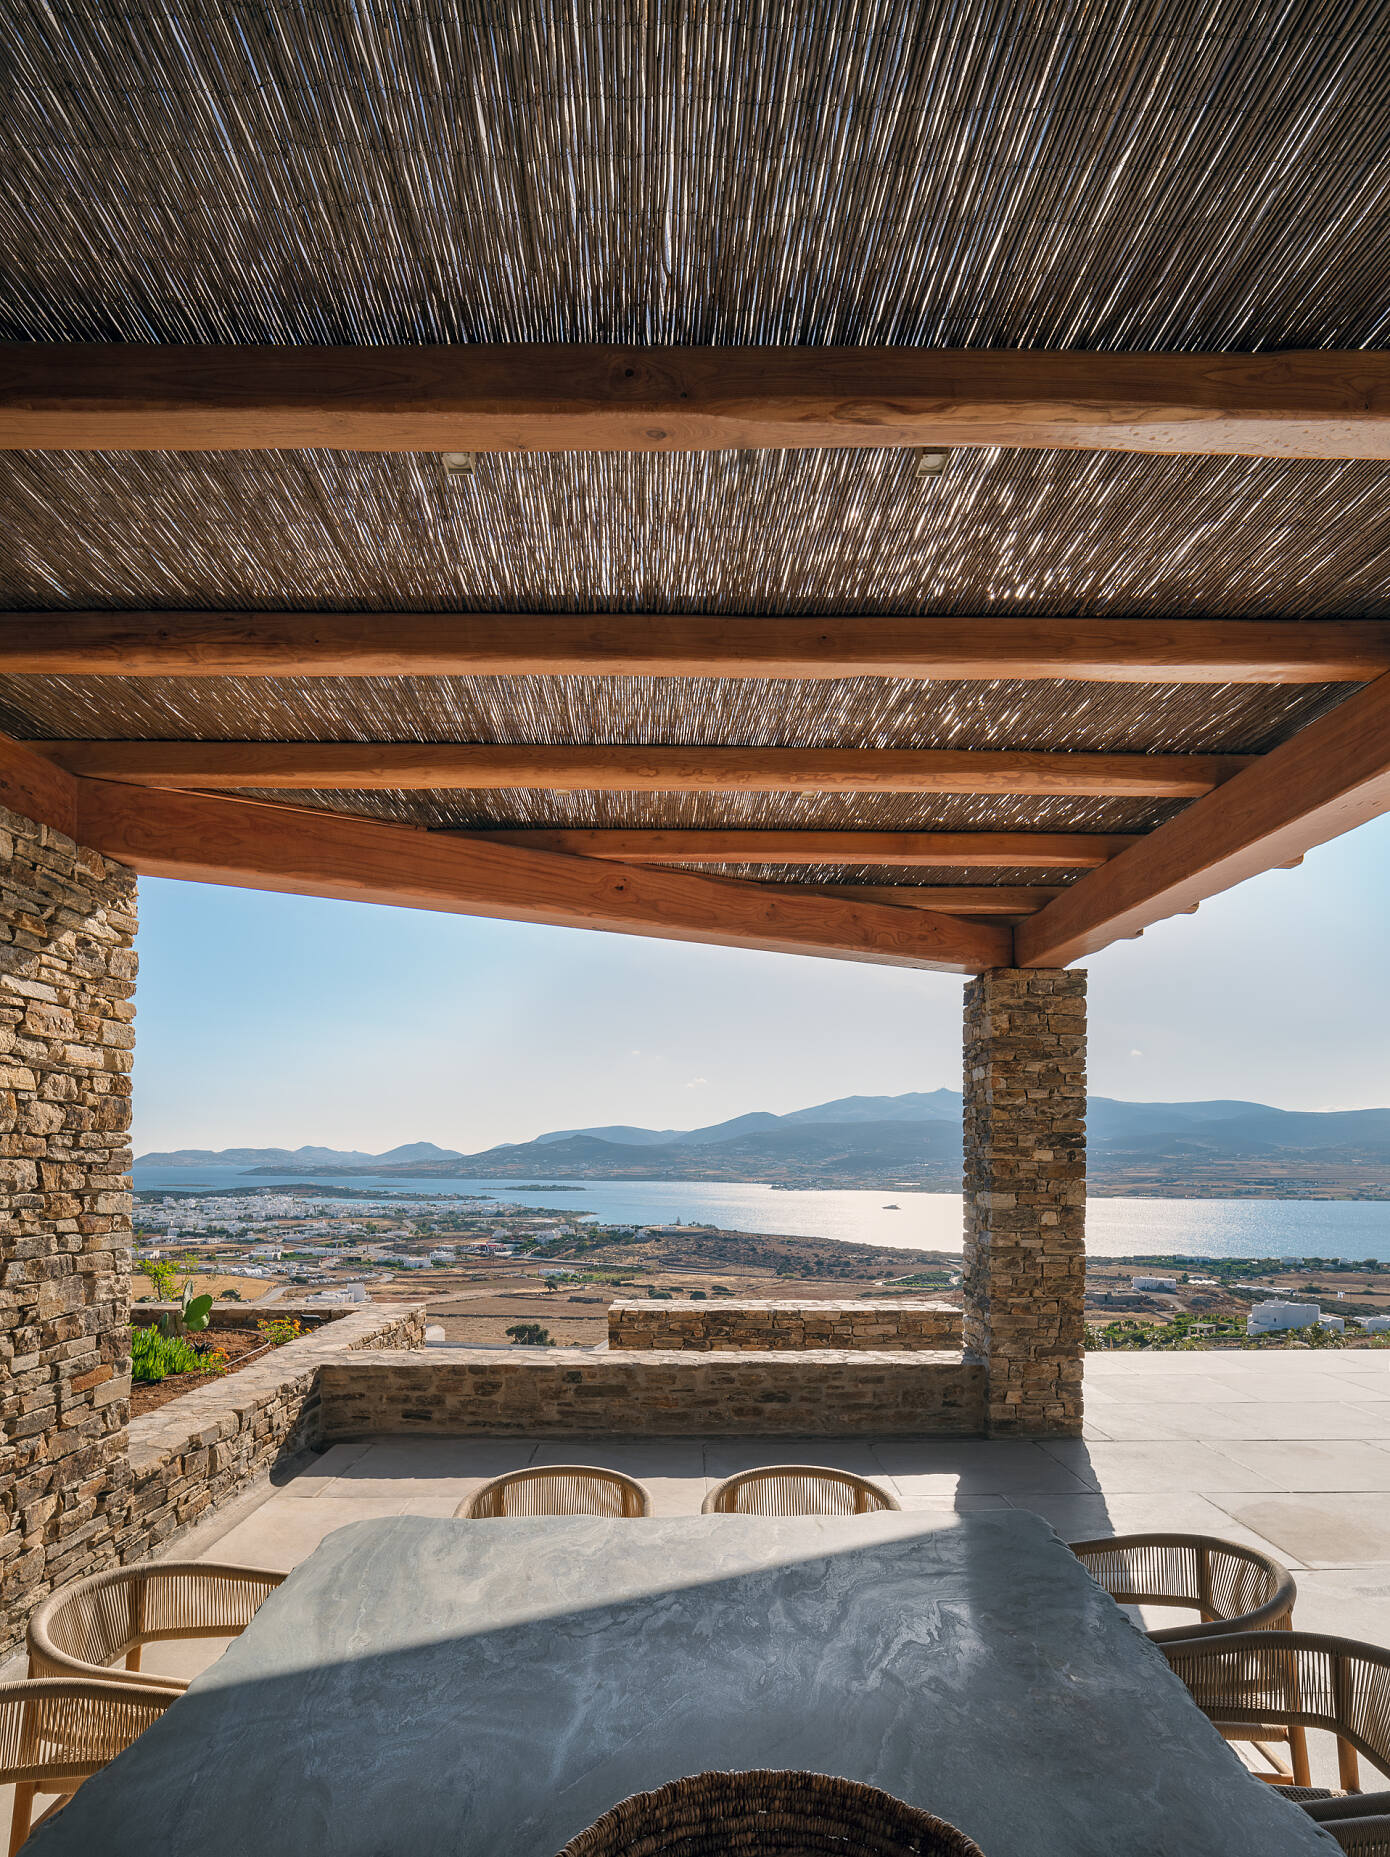 Encaved Stone Villa by Tsolakis Architects